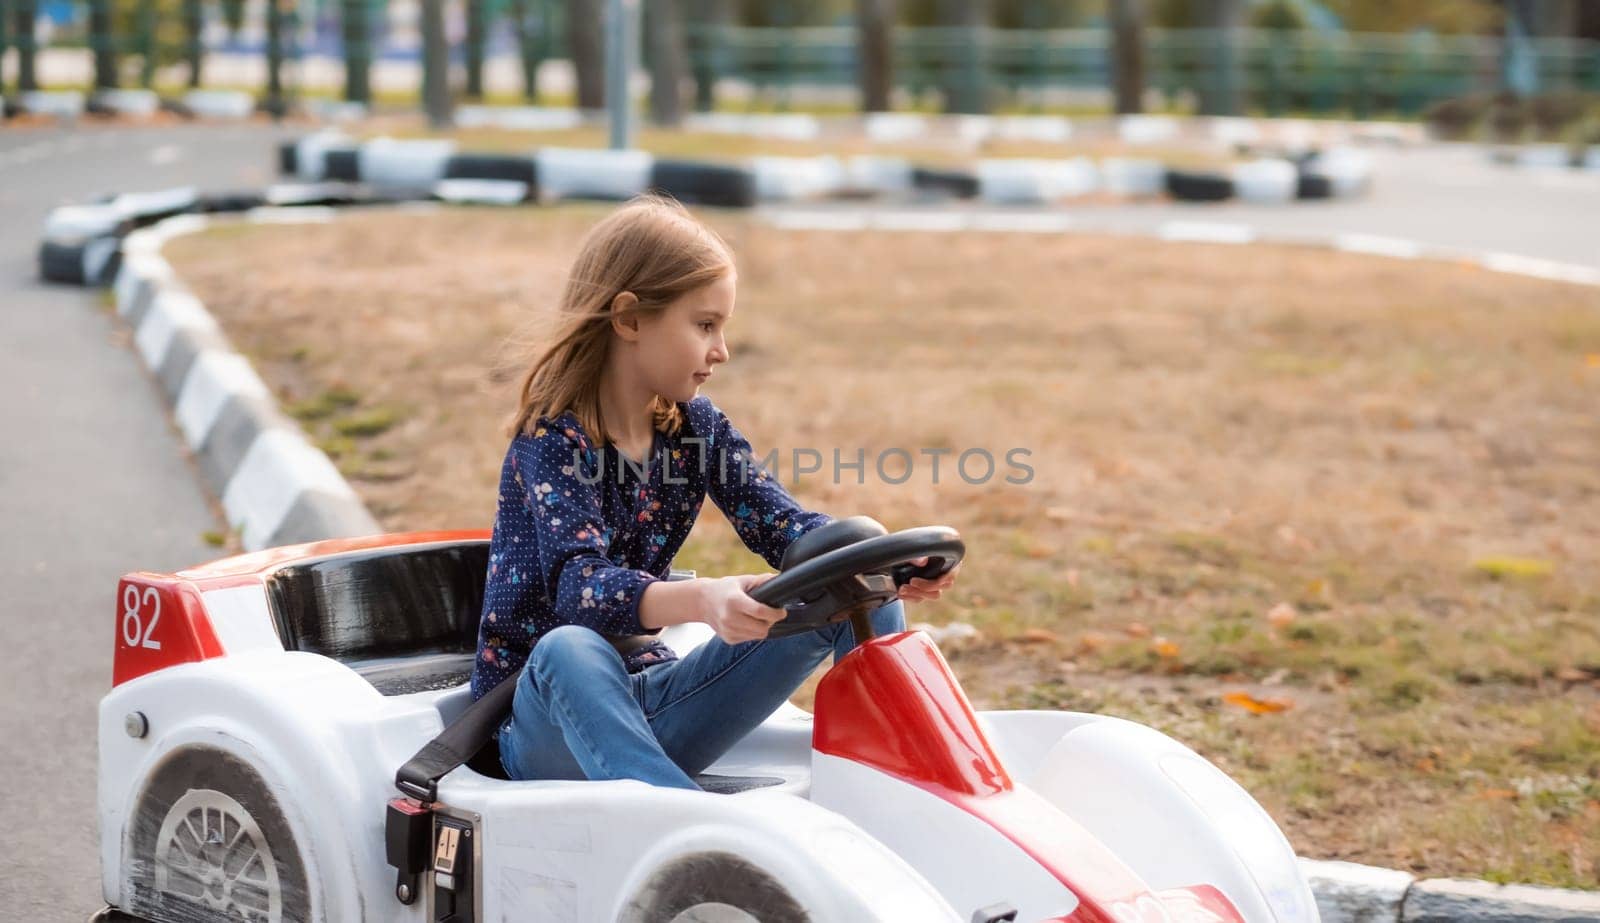 Little girl driving car in adventure park by GekaSkr